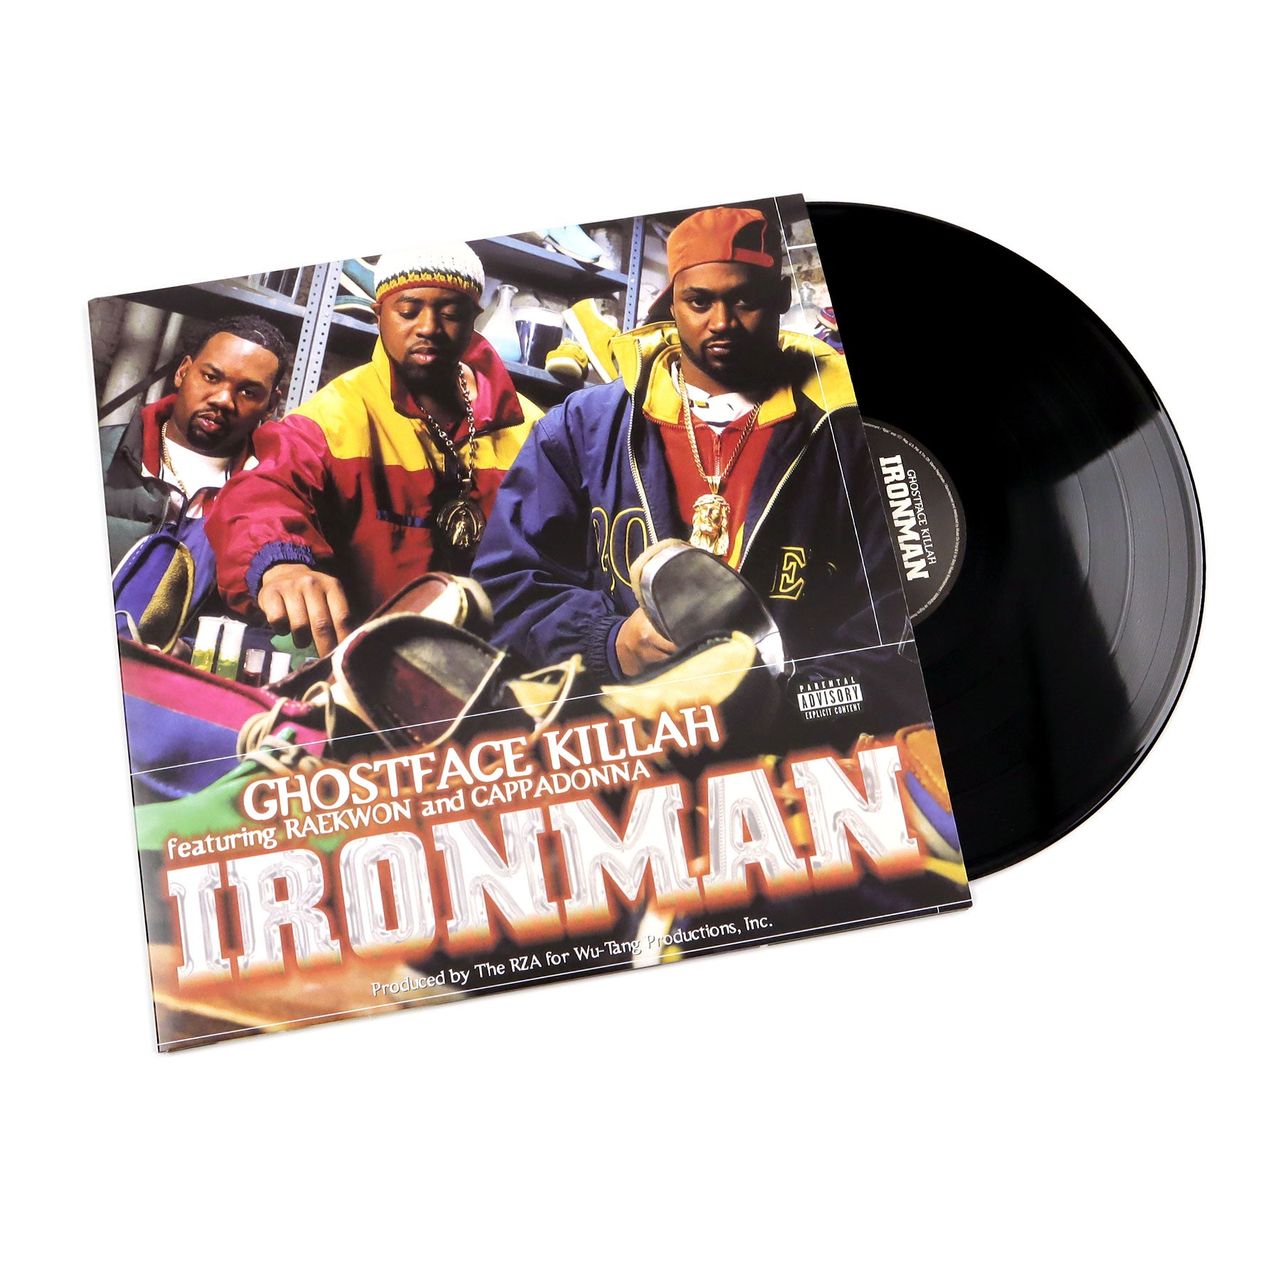 Ghostface Killah Ironman - 180 Gram Black Vinyl UK 2-LP vinyl set